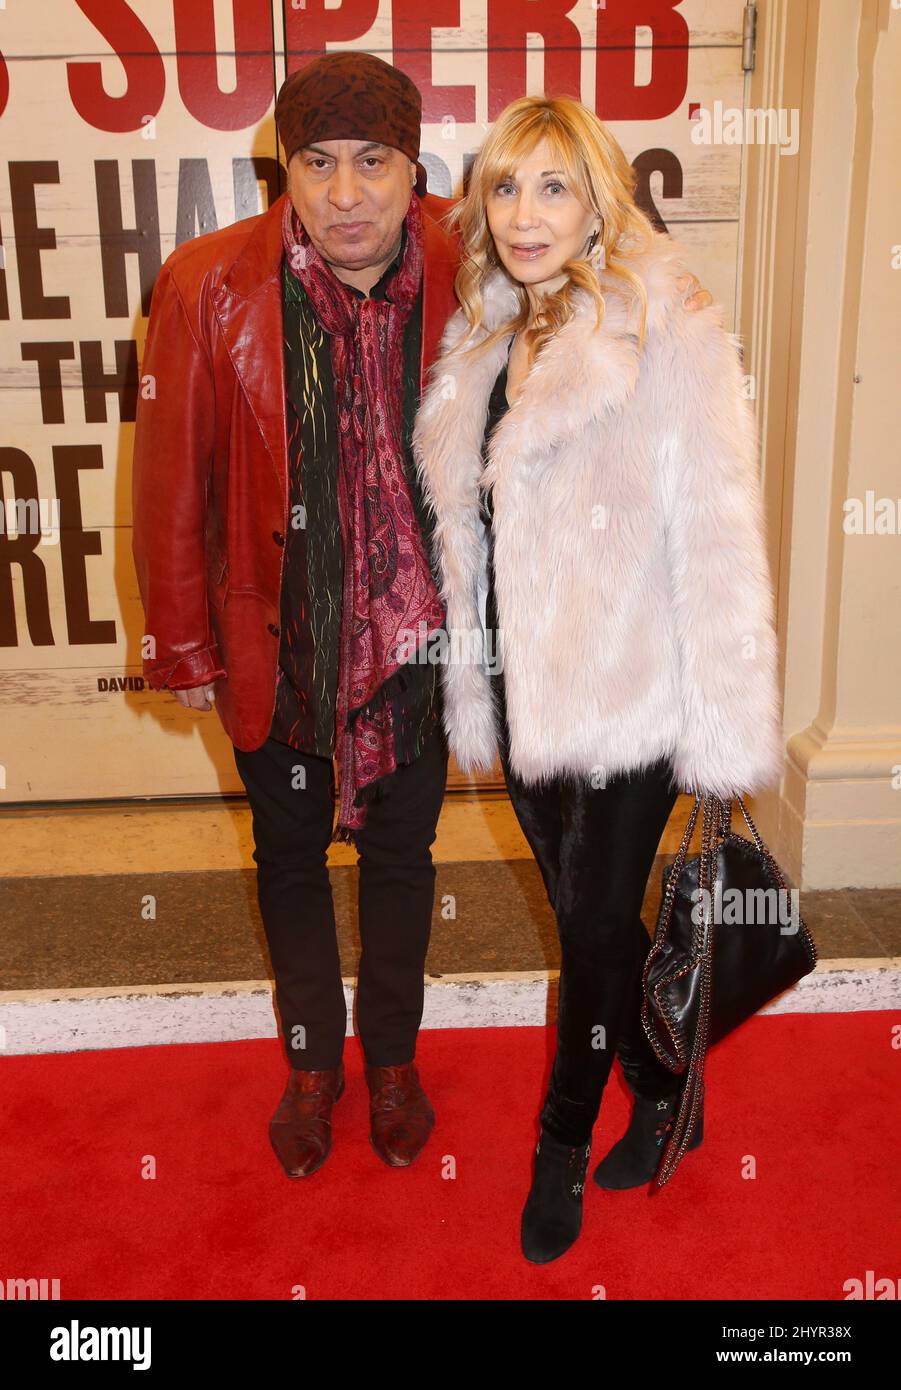 Steven Van Zandt & Maureen Van Zandt attending the 'Girl From The North Country' Broadway Opening Night Arrivals held at The Belasco Theatre Stock Photo